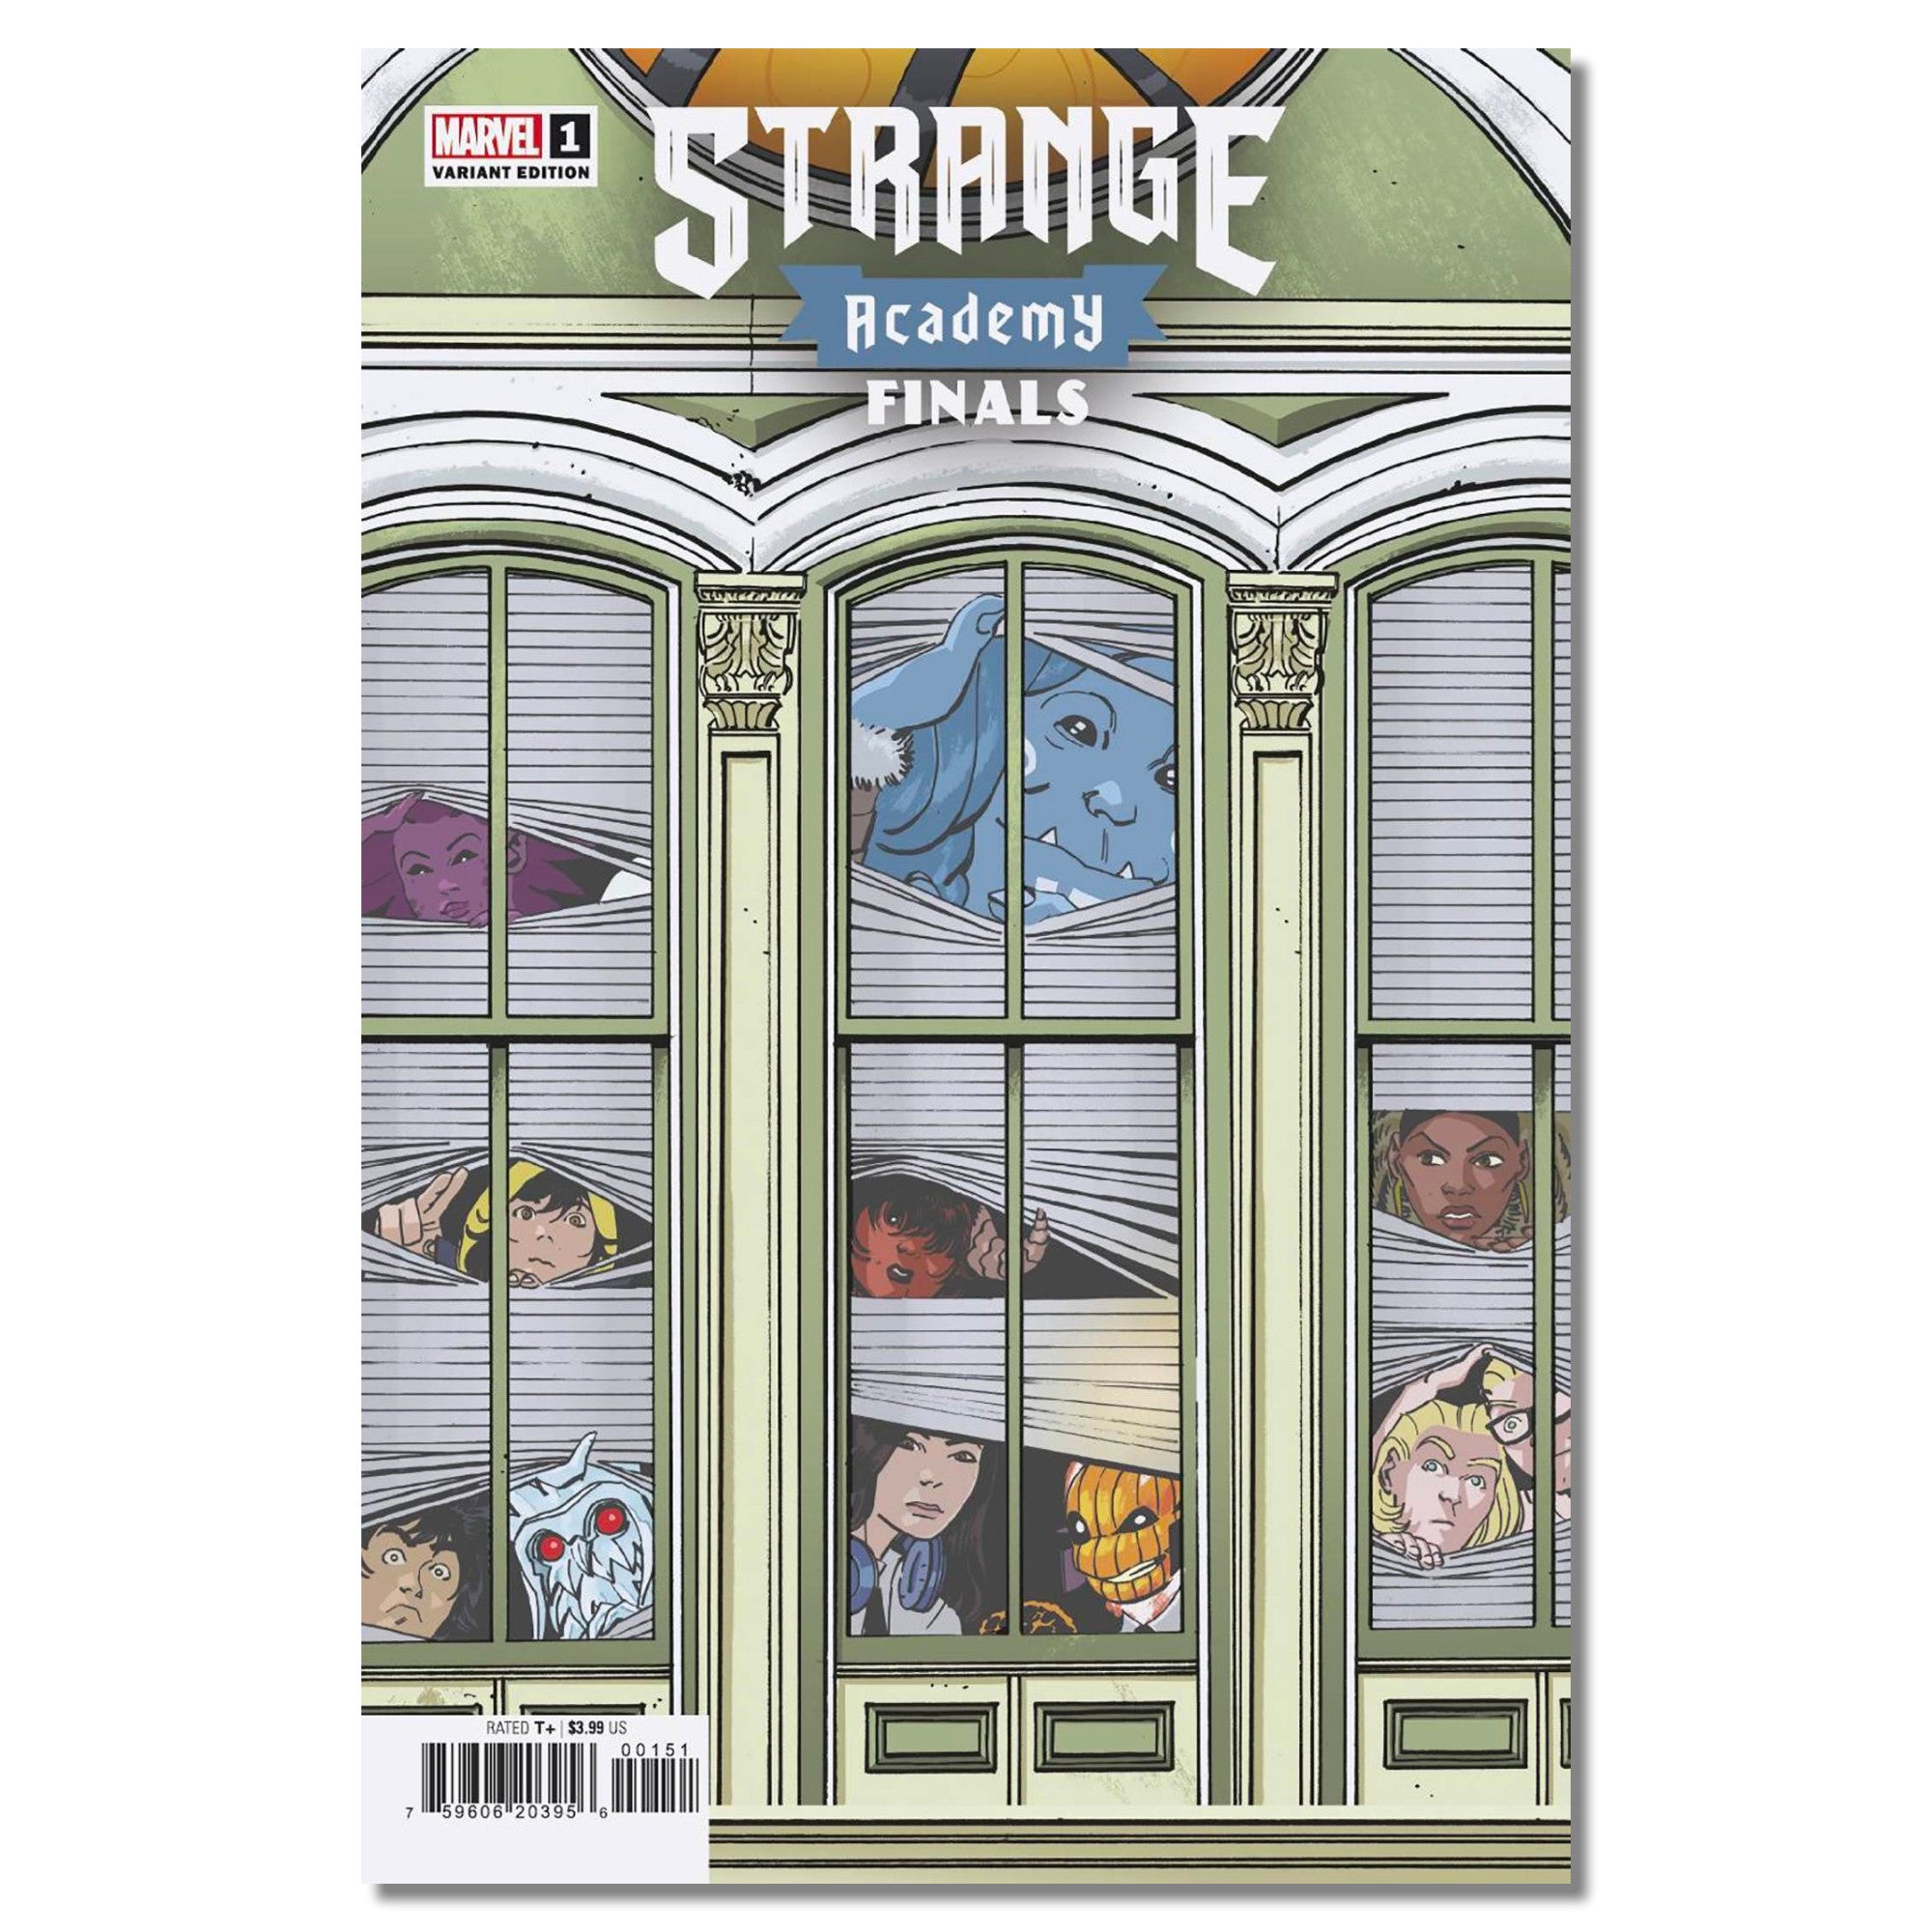 Strange Academy Finals #1 Cover Variant REILLY FINALSALE